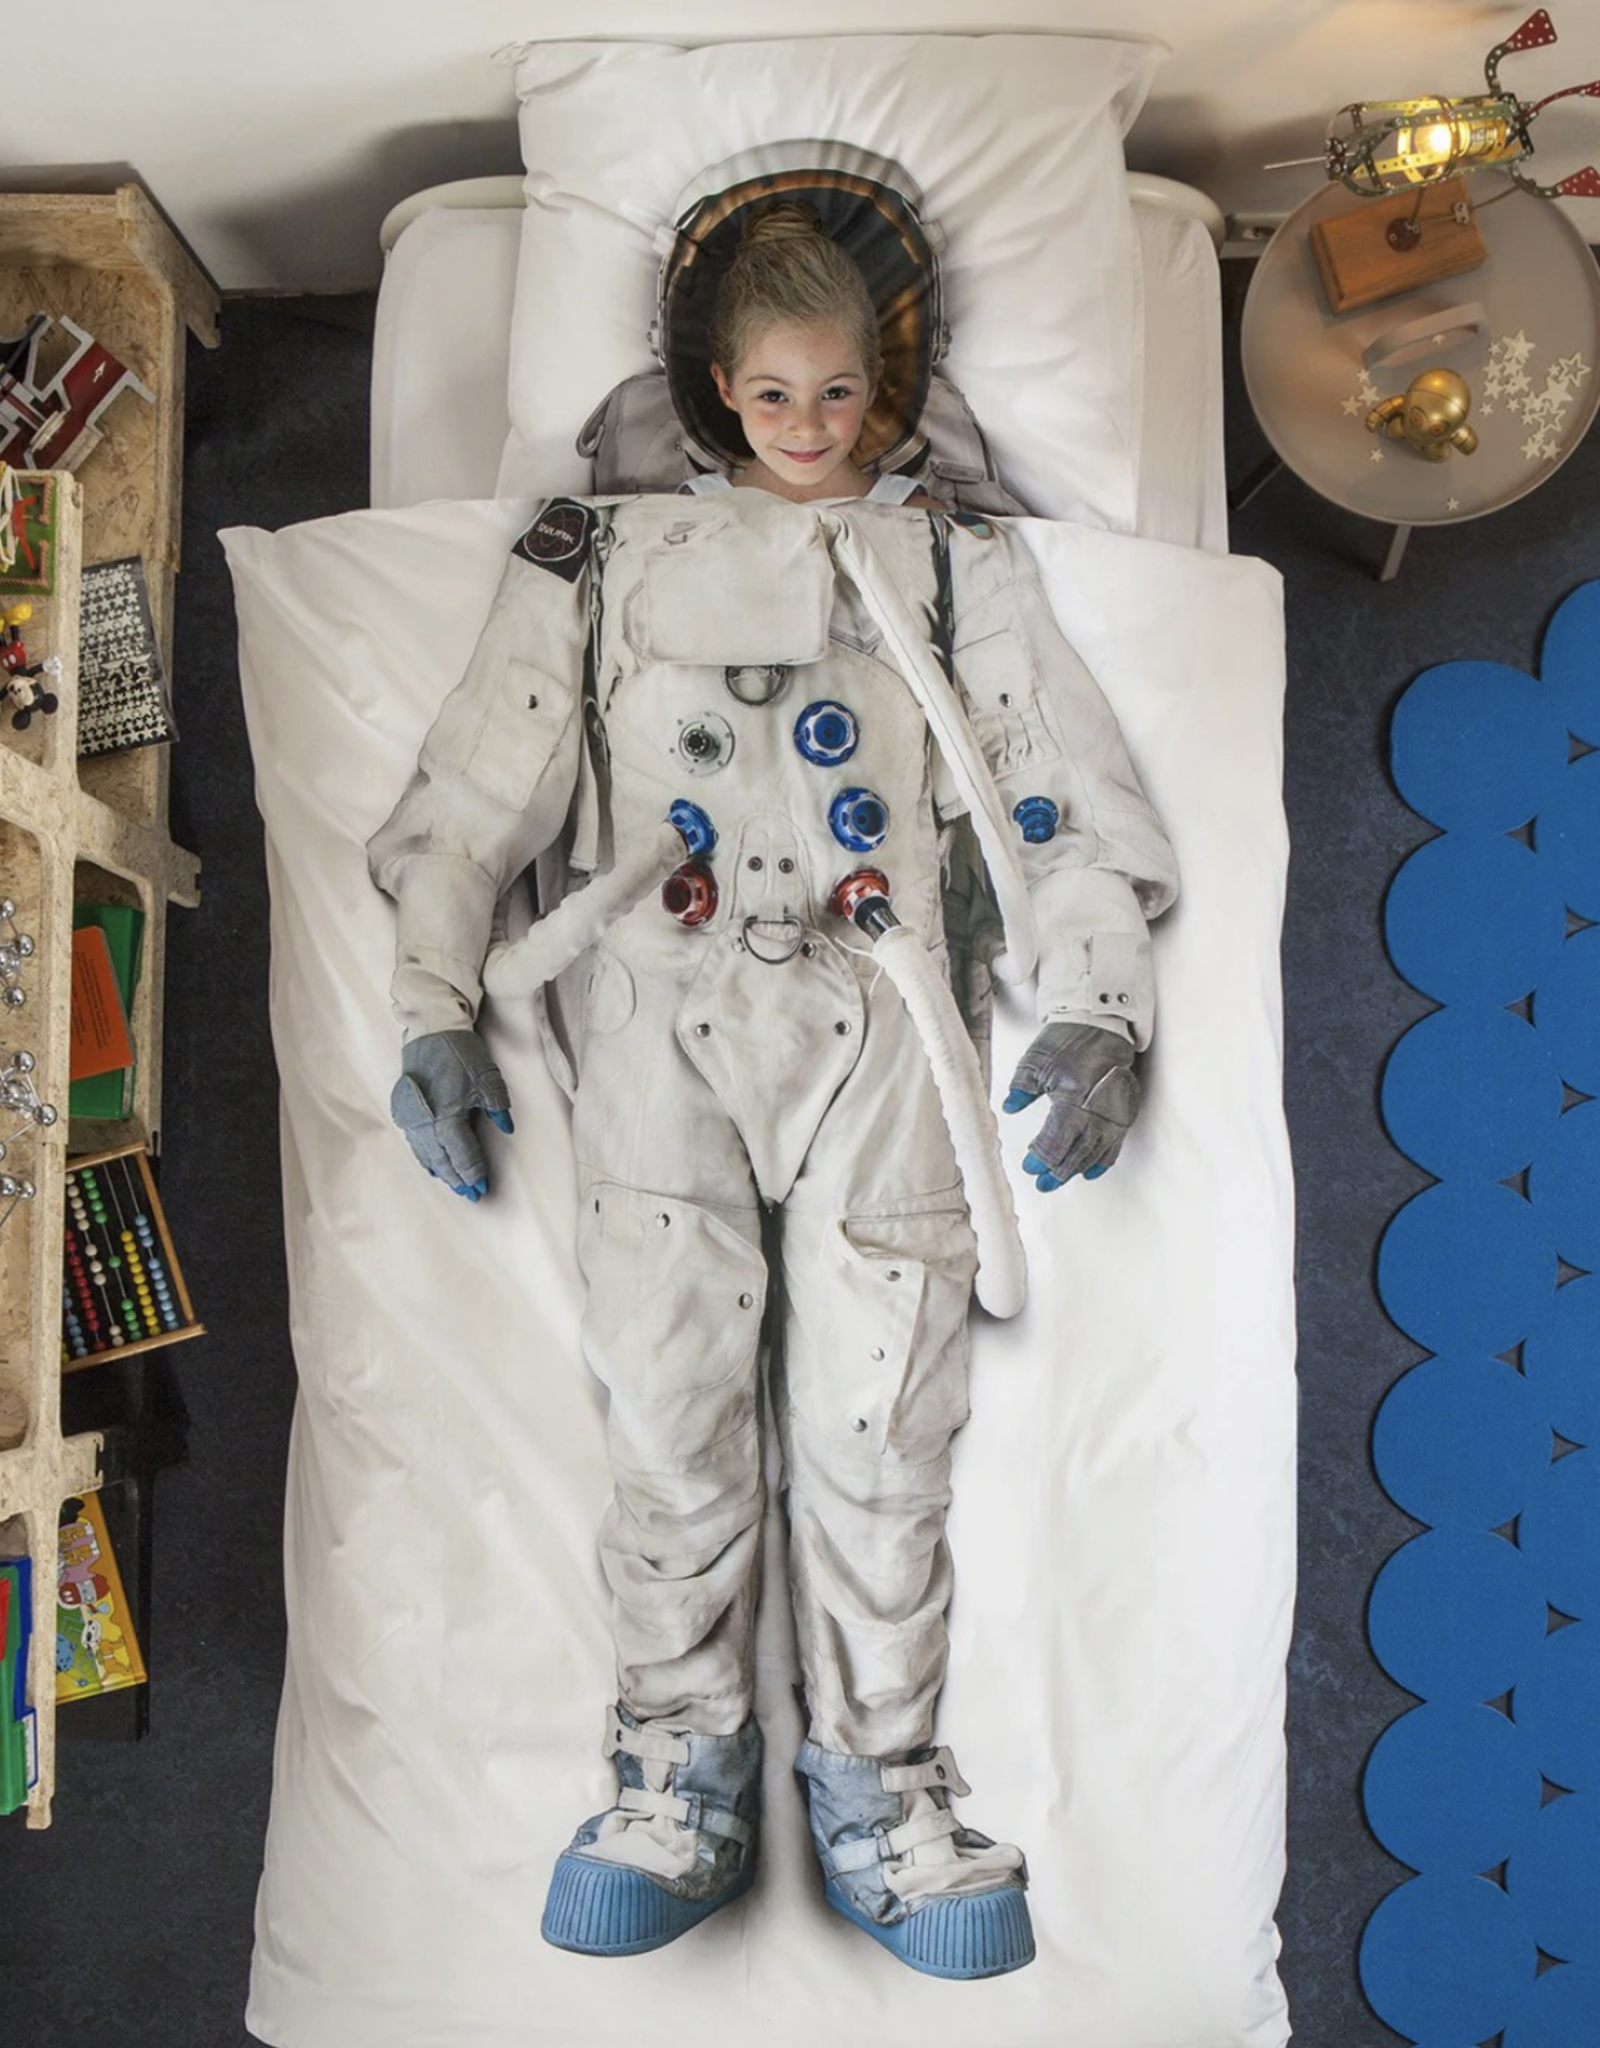 Snurk Astronaut Twin Bedding Duvet Cover